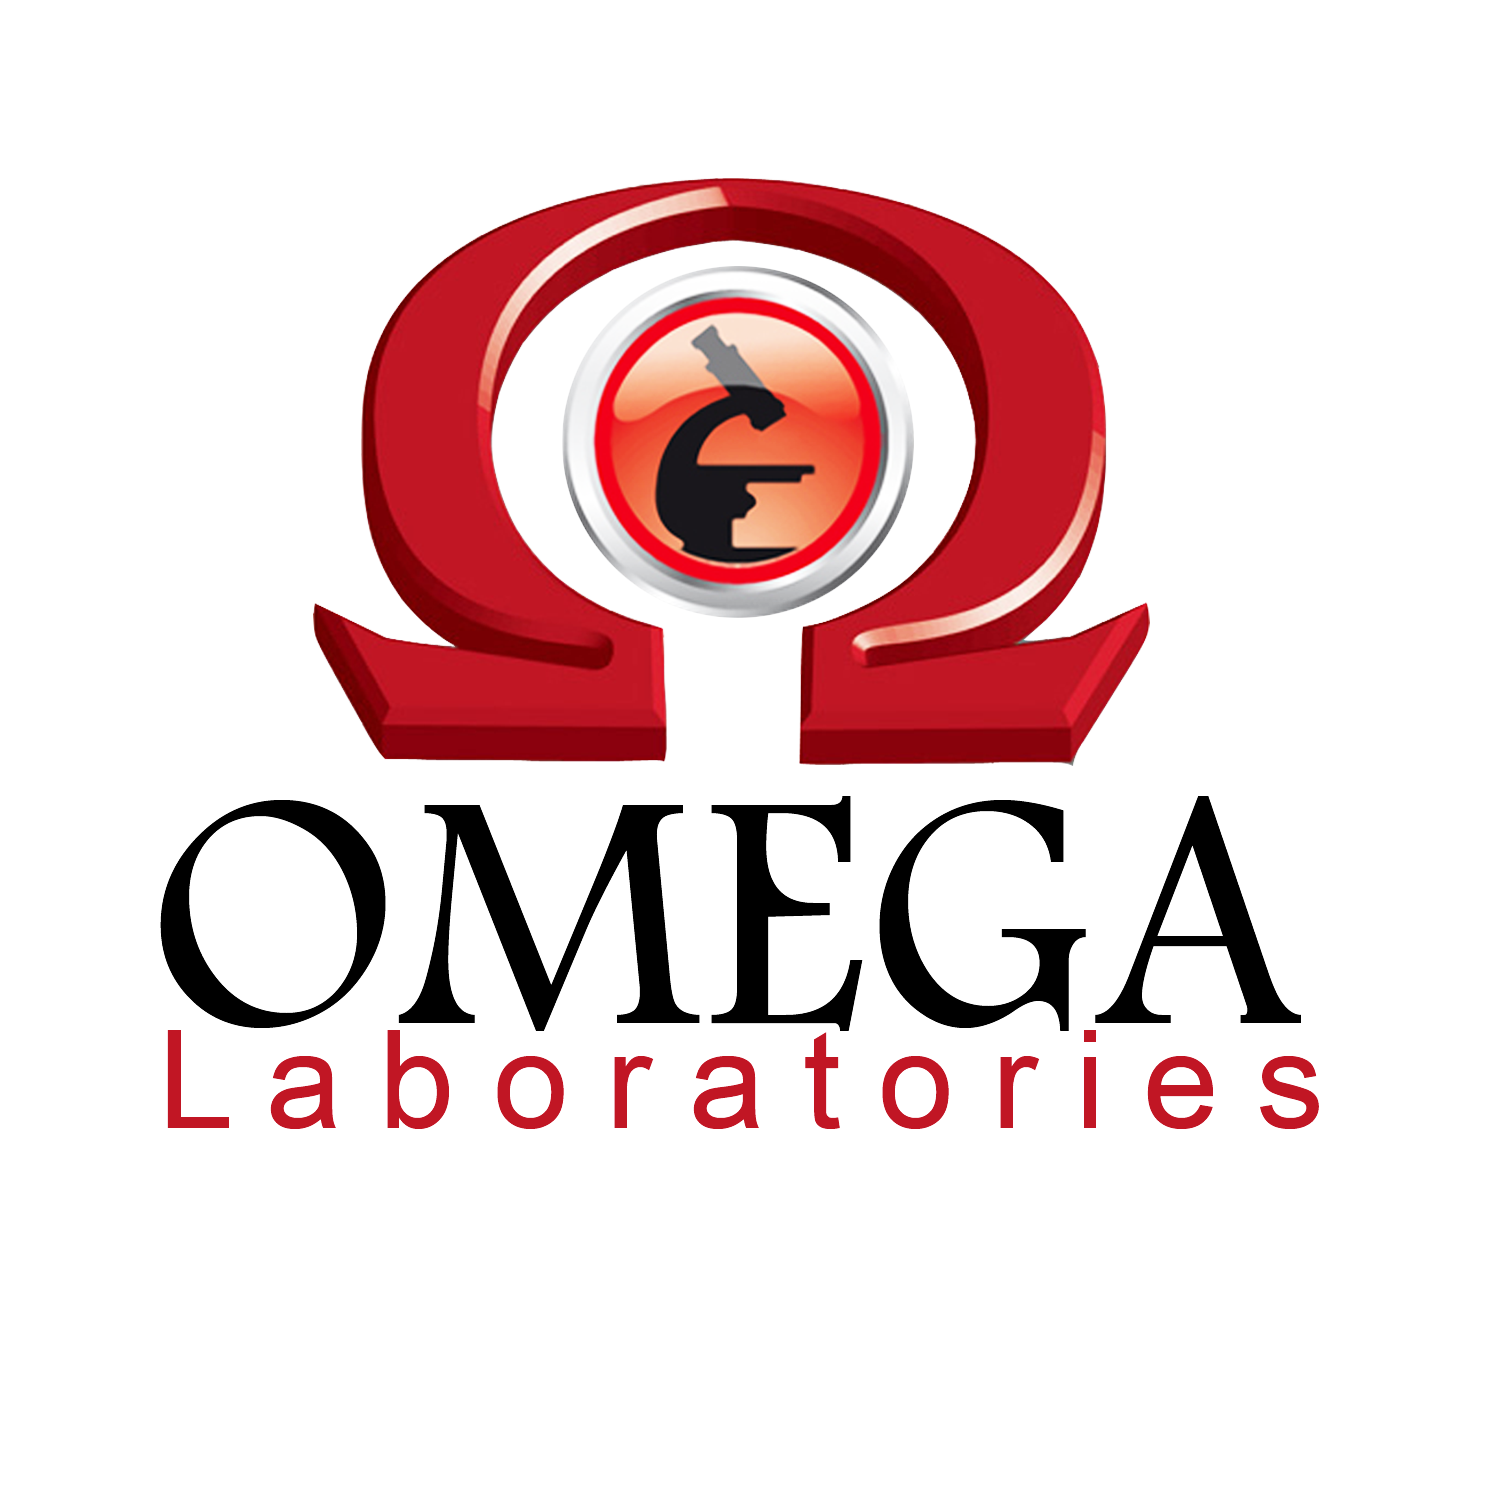 omega lab